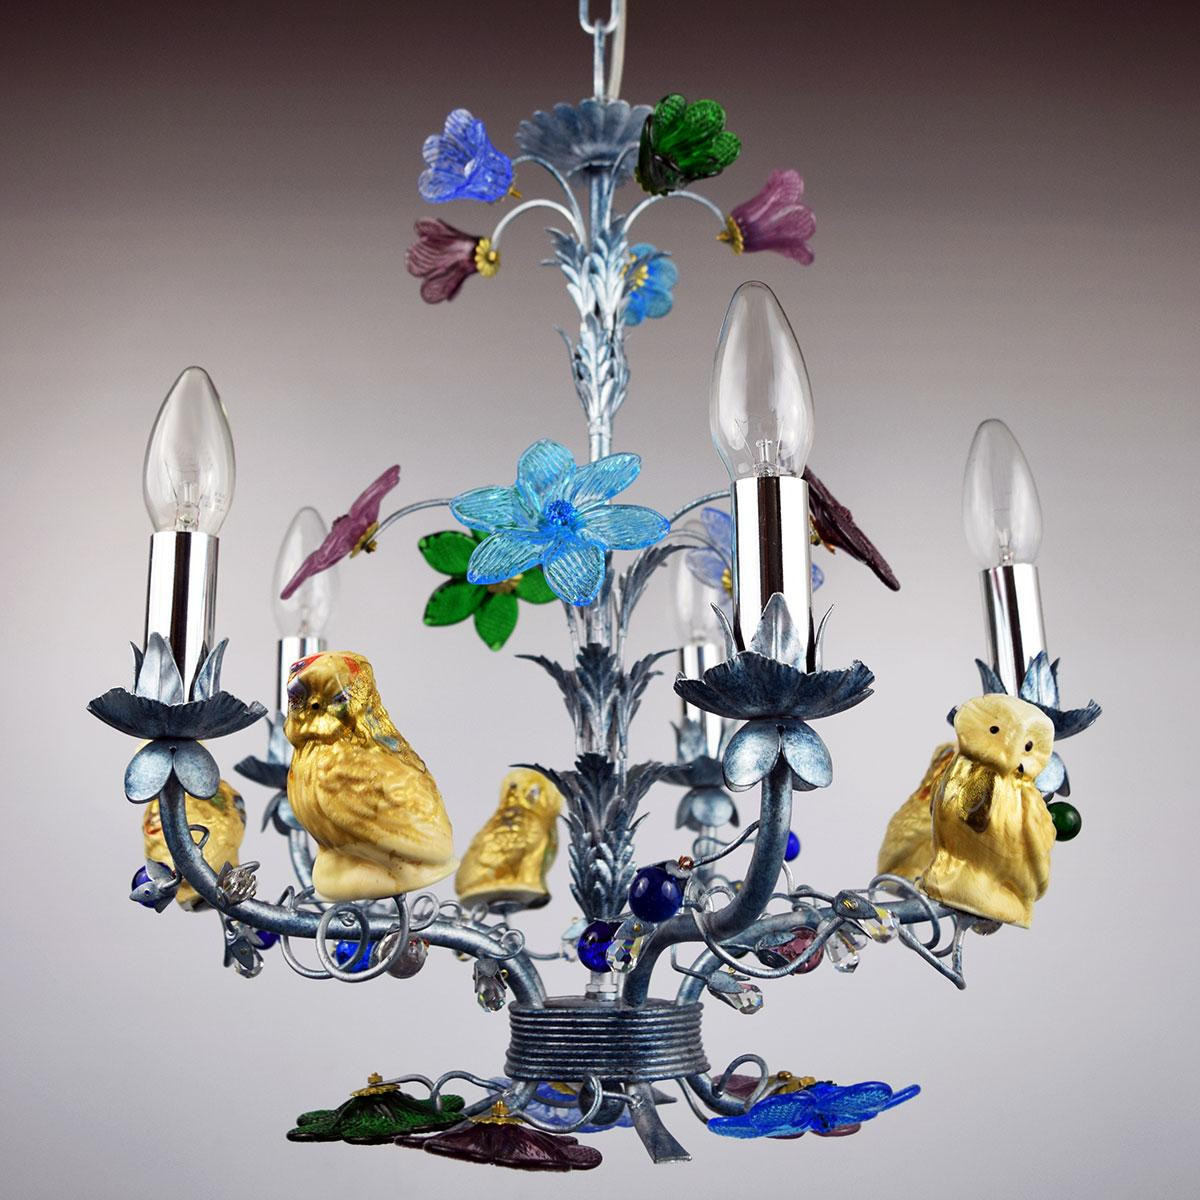 "Civetta" Murano glass chandelier - 5 lights